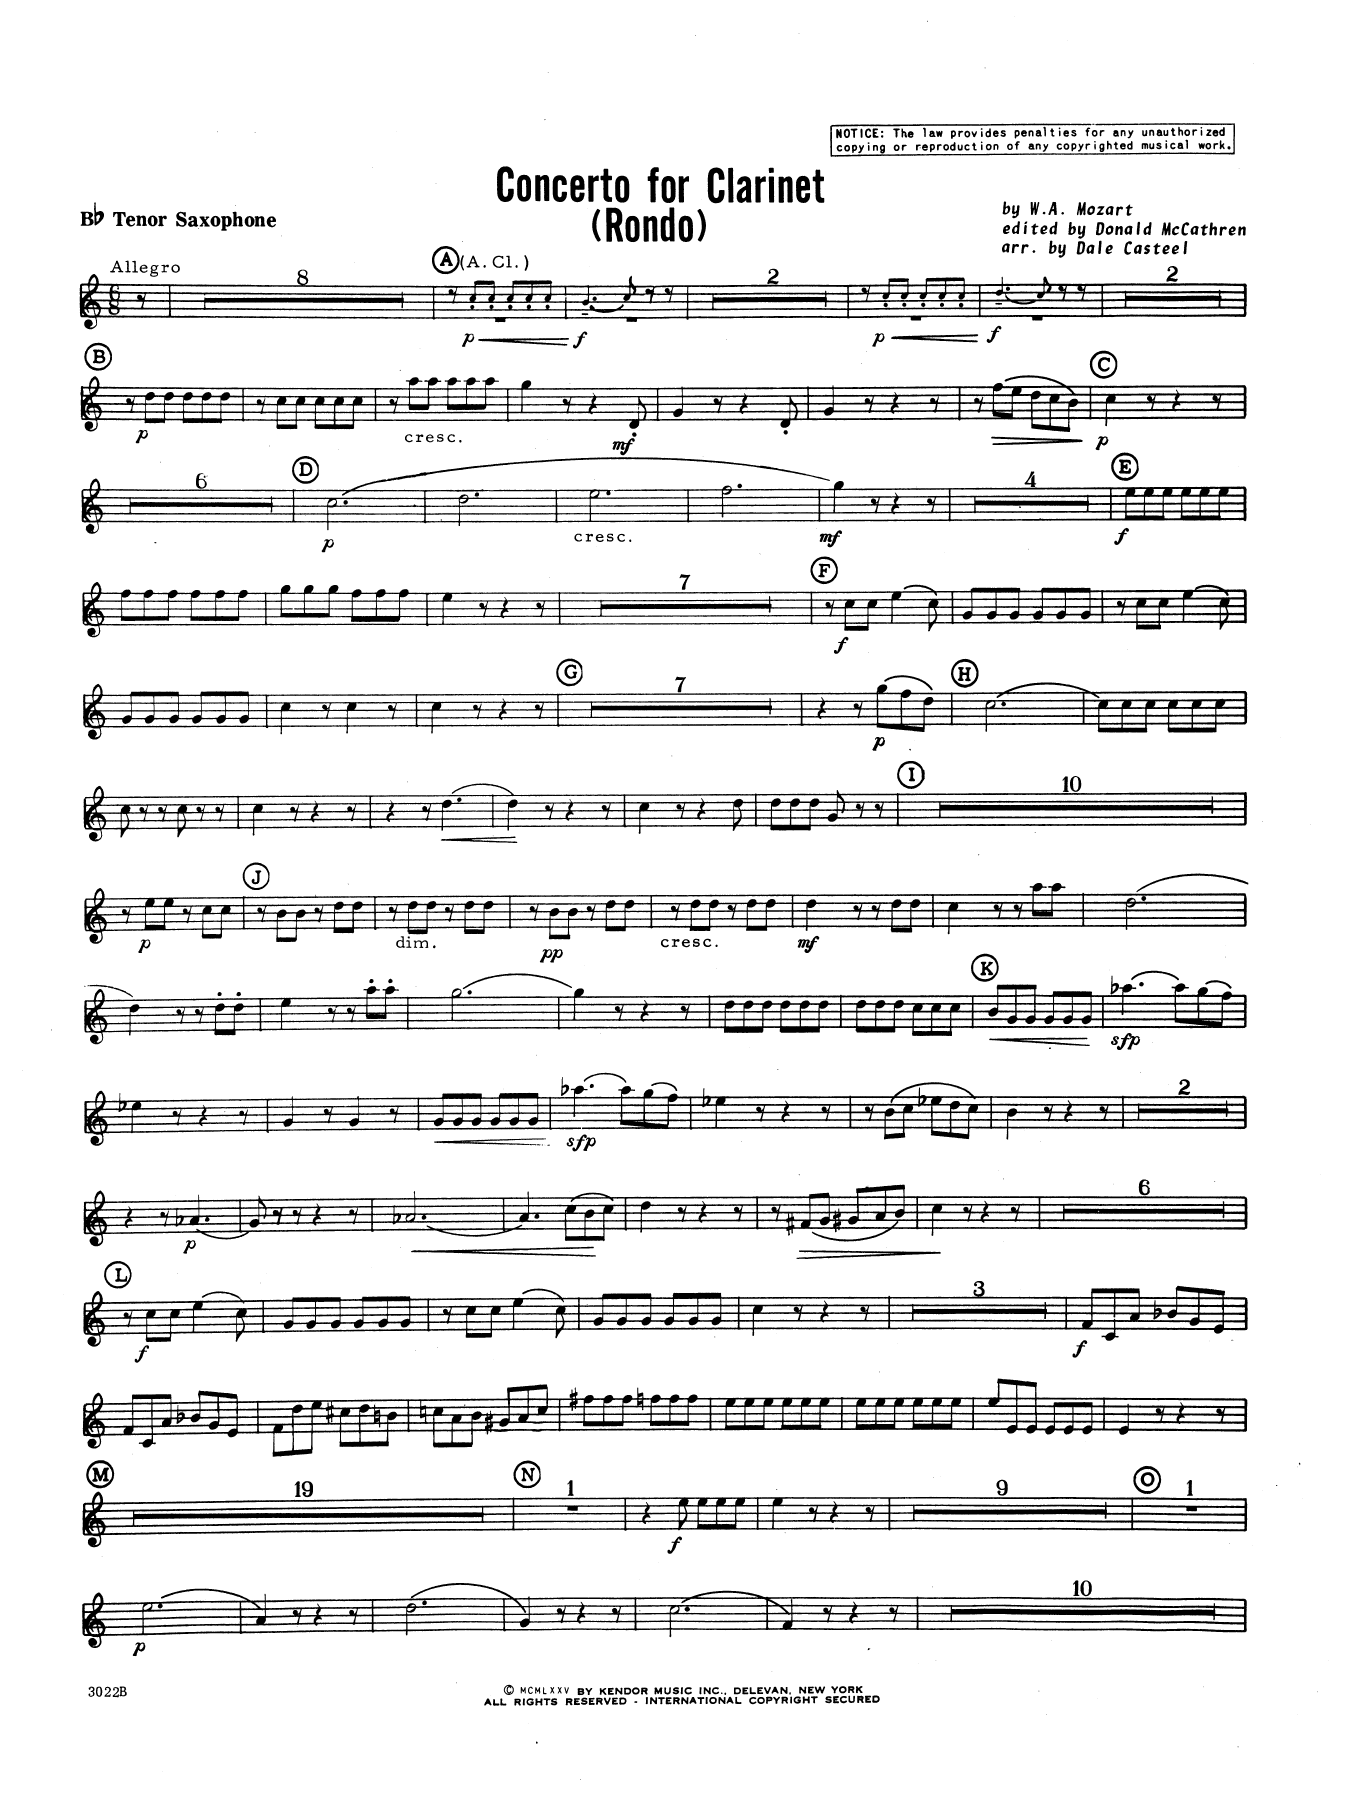 Concerto For Clarinet - Rondo (3rd Movement) - K.622 - Bb Tenor Saxophone (Concert Band) von Donald McCathren and Dale Casteel